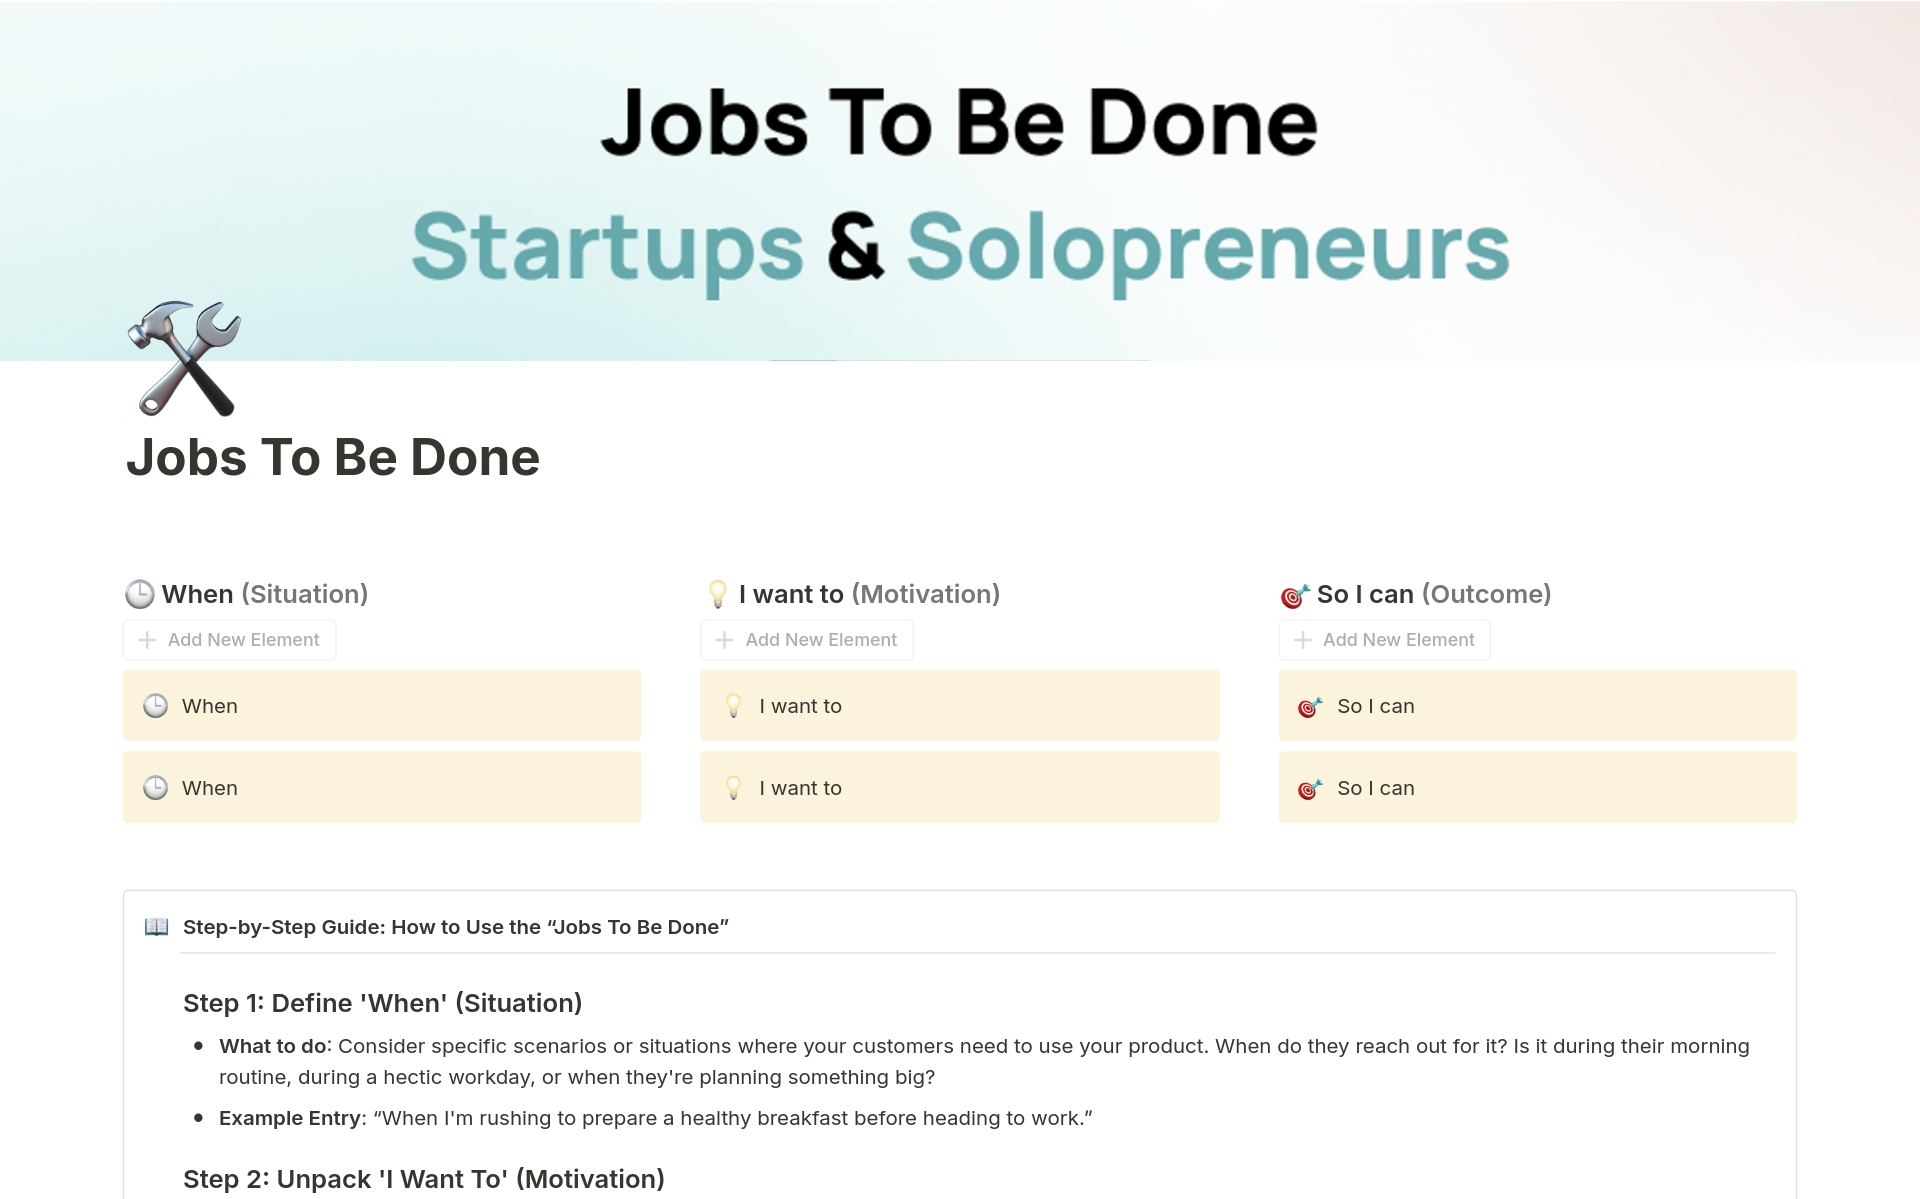 Vista previa de una plantilla para Jobs To Be Done for Startups & Solopreneurs